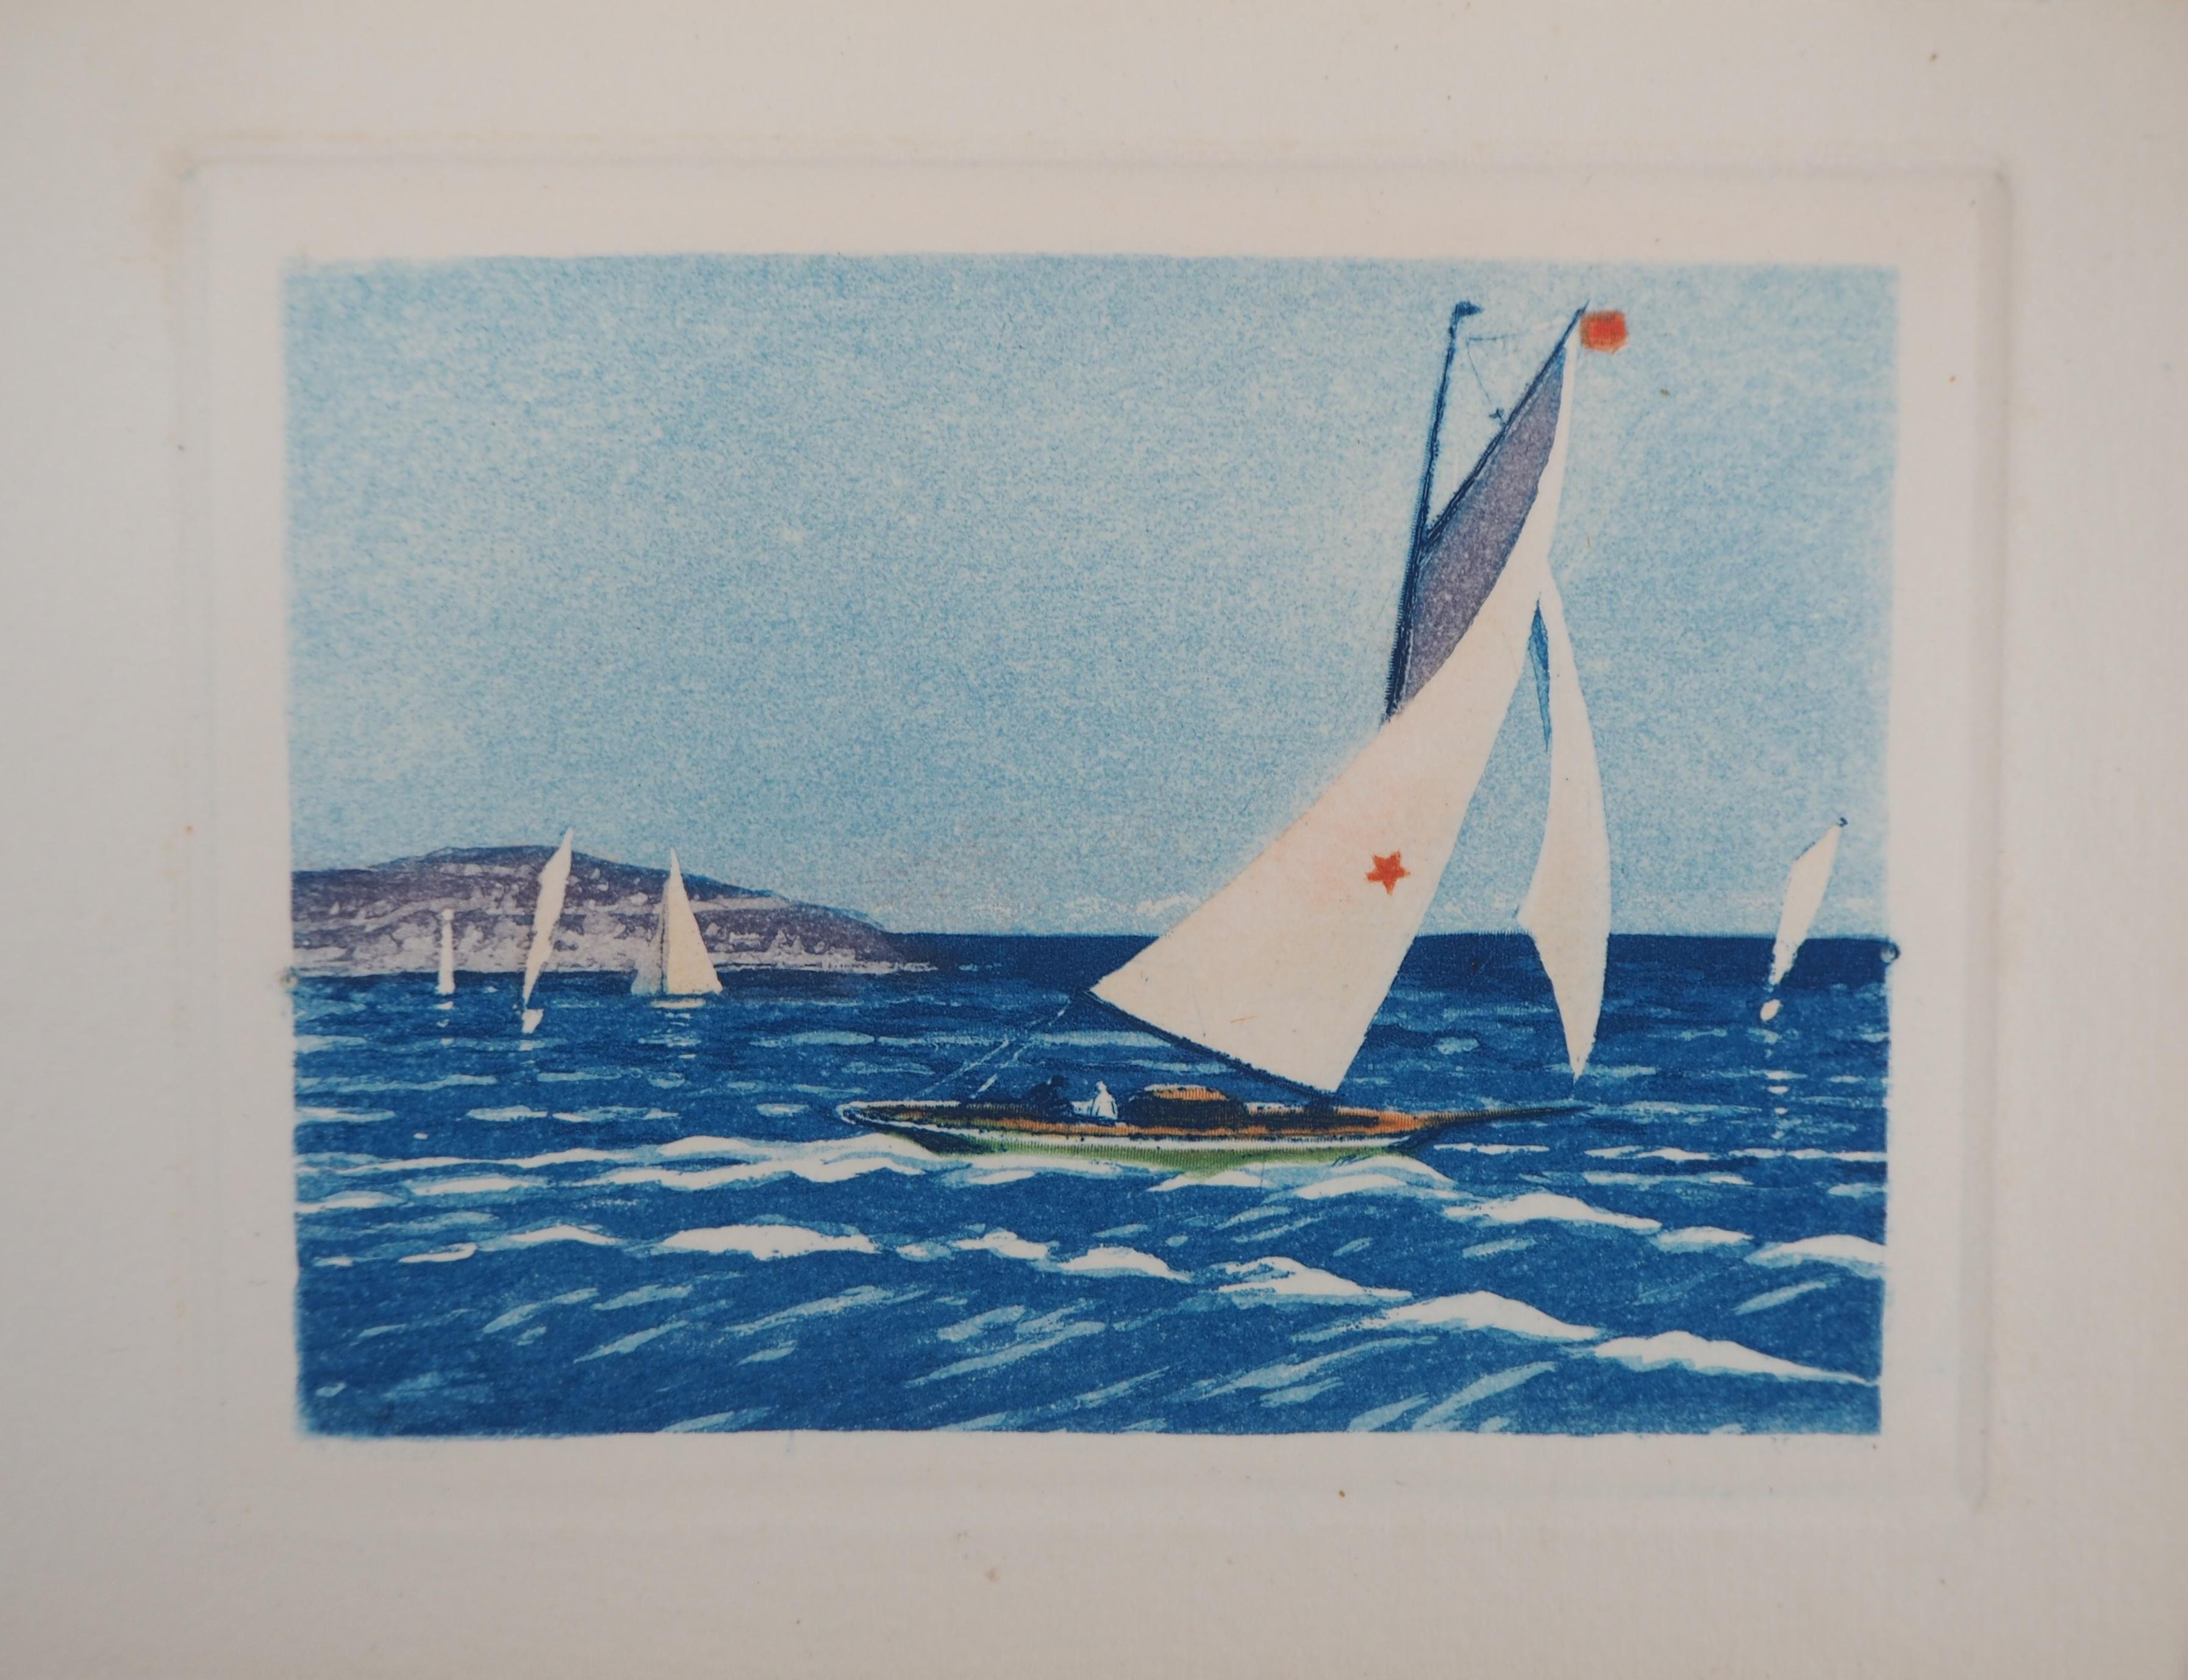 Atlantic : Regatta of Sailboats - Original etching